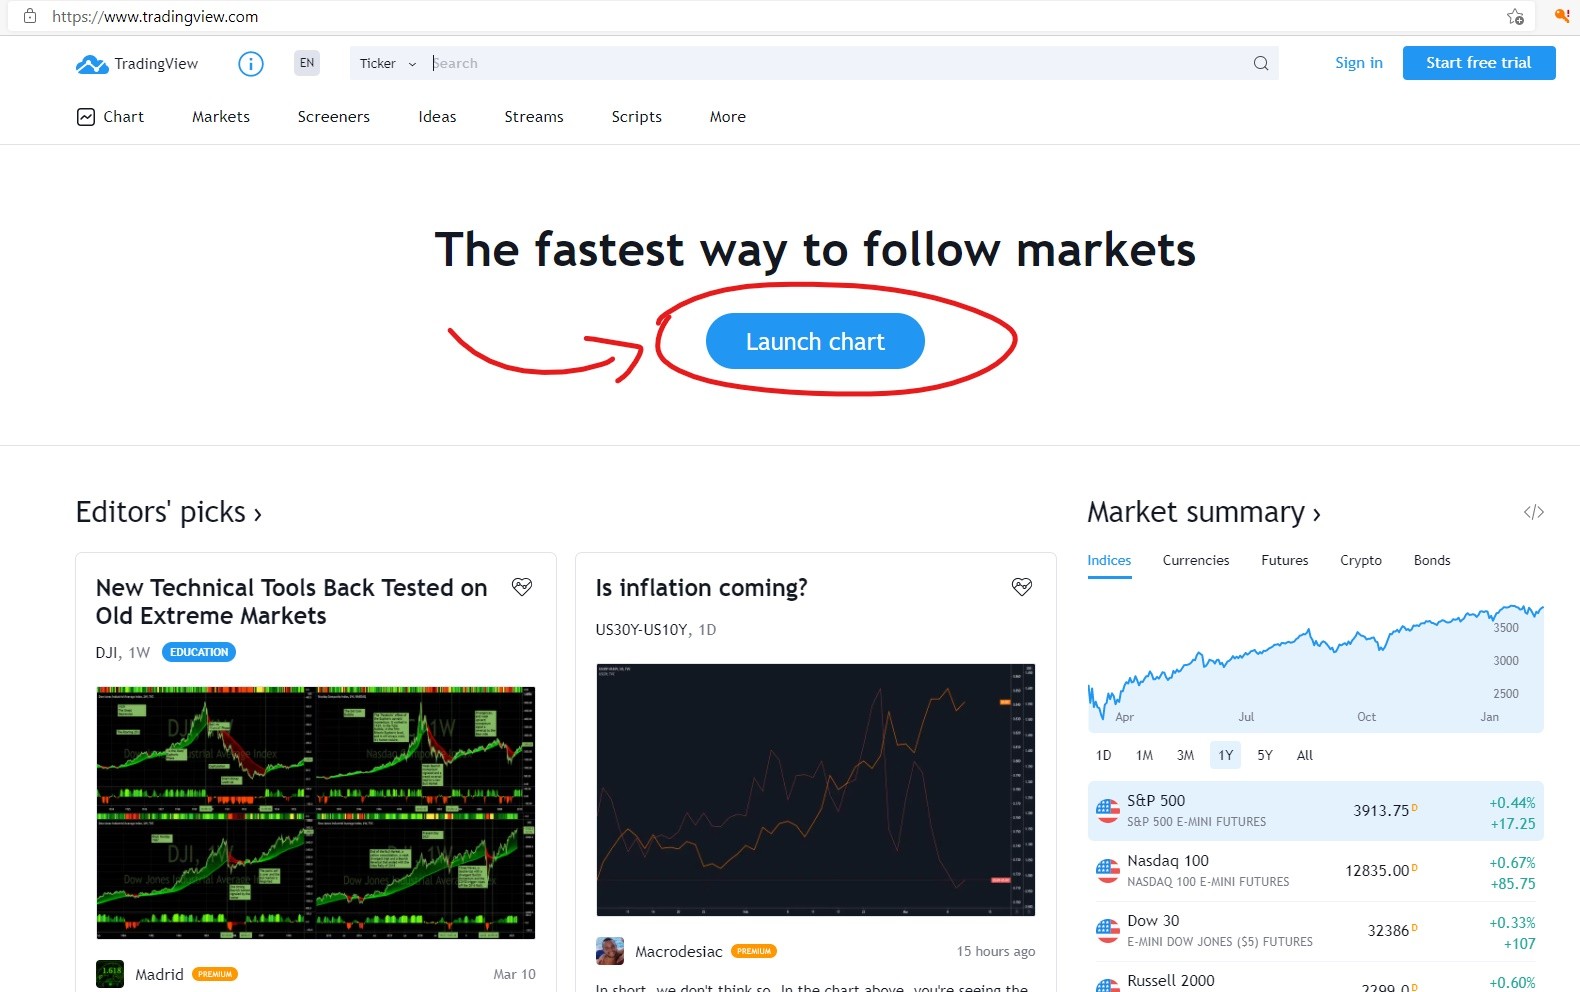 TradingView Homepage - Launch Chart